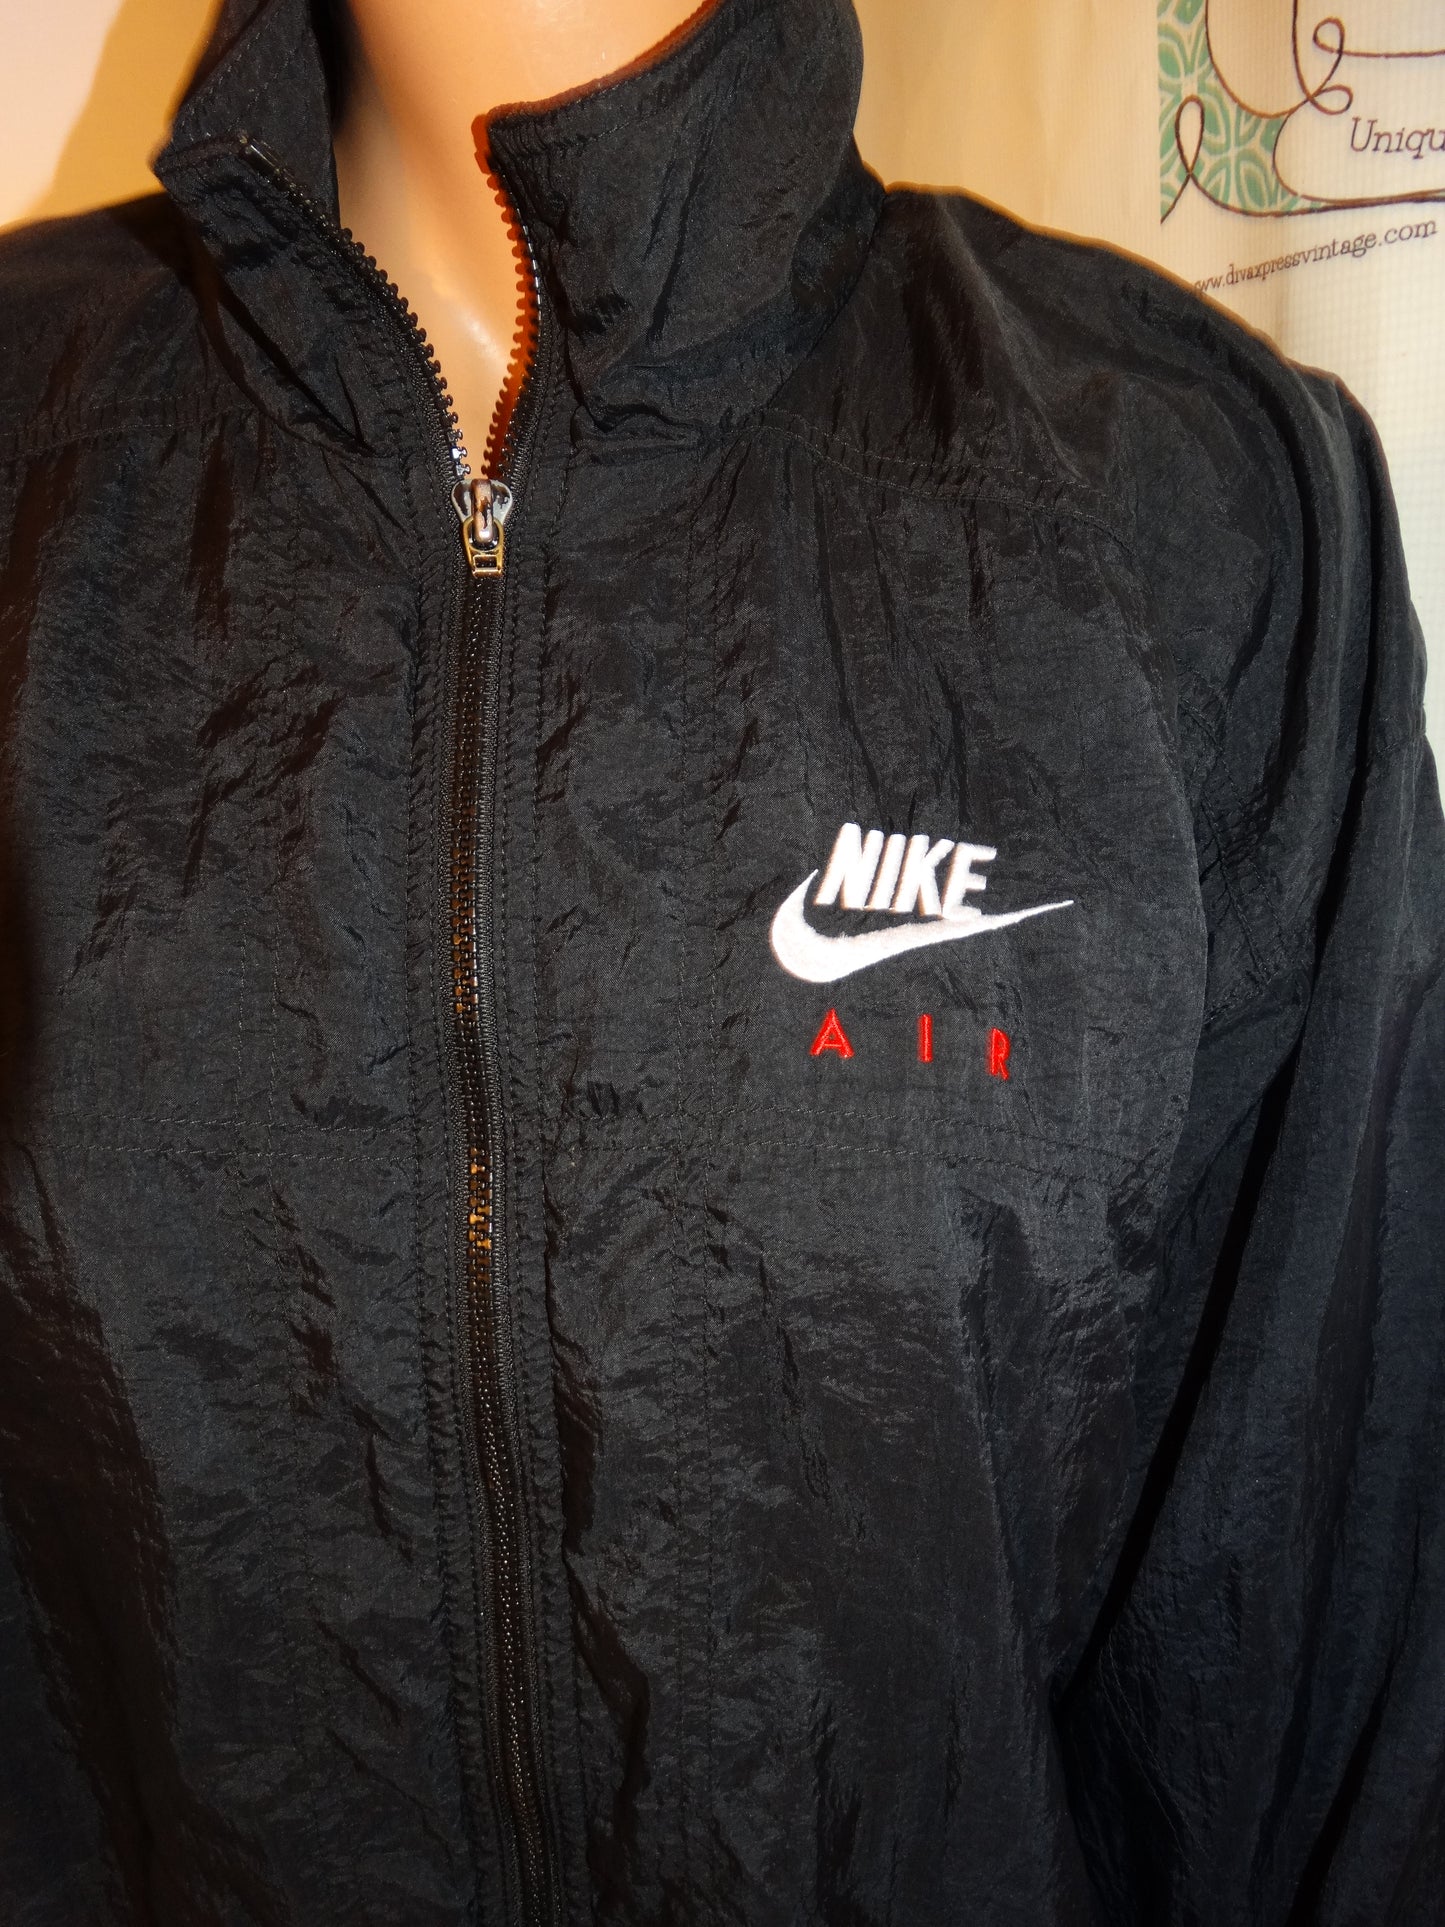 Vintage Nike Black Jacket Size 1x